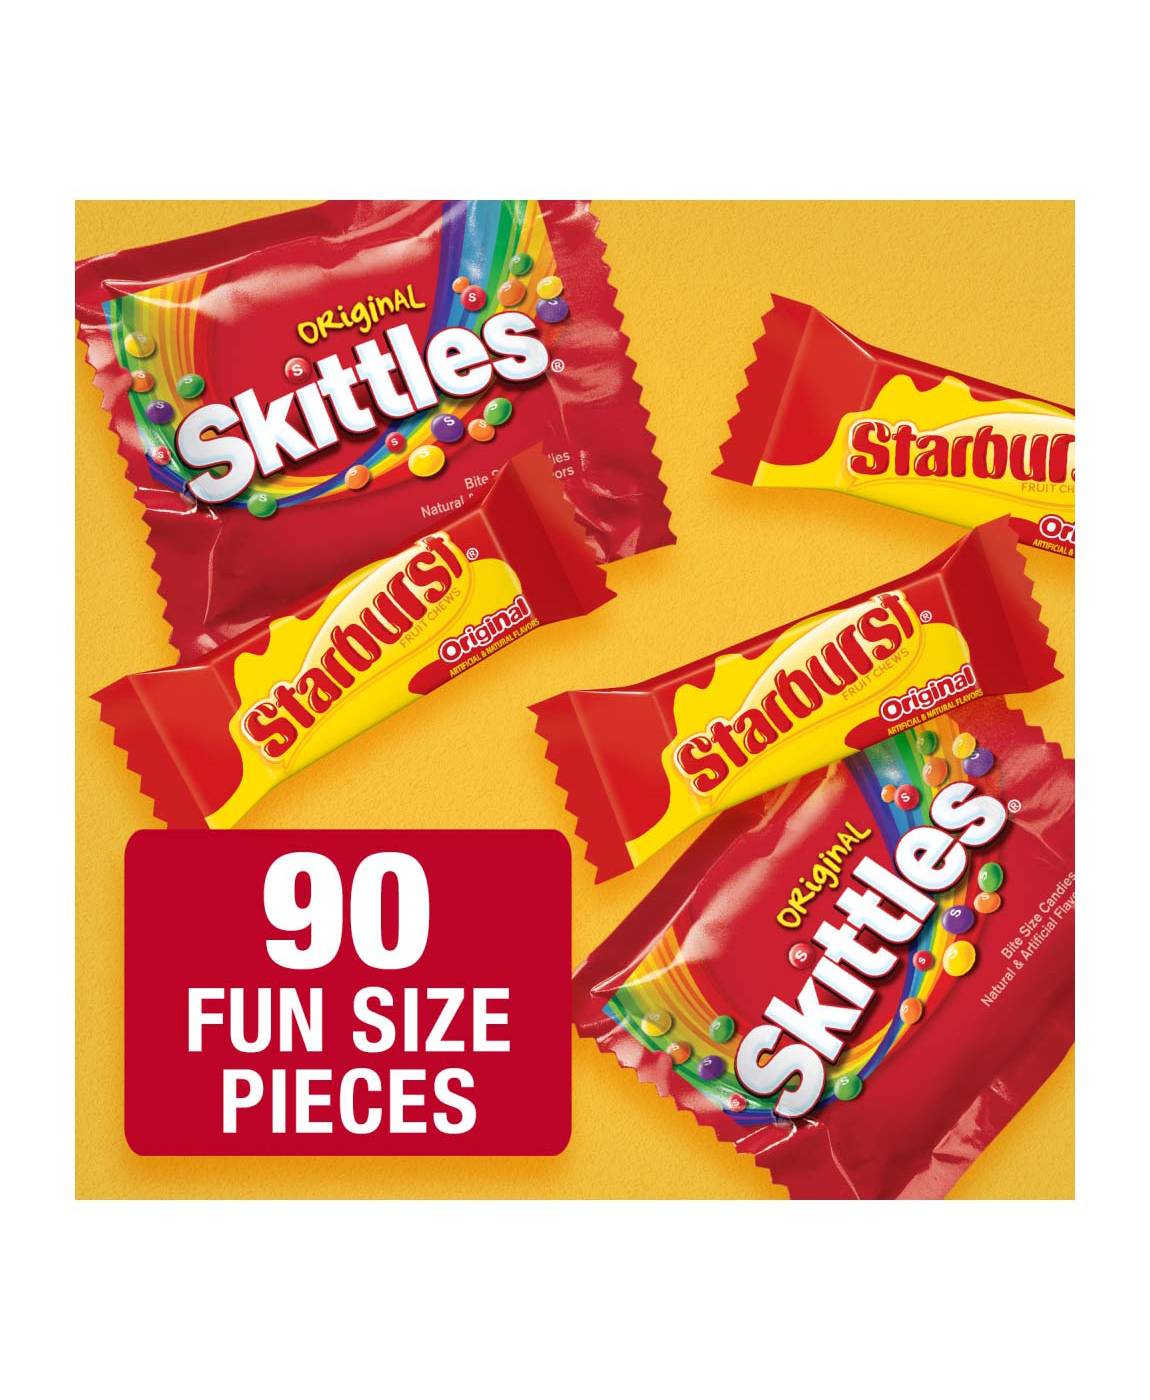 Mars (Skittles & Starburst) Original Halloween Candy Bag; image 6 of 7